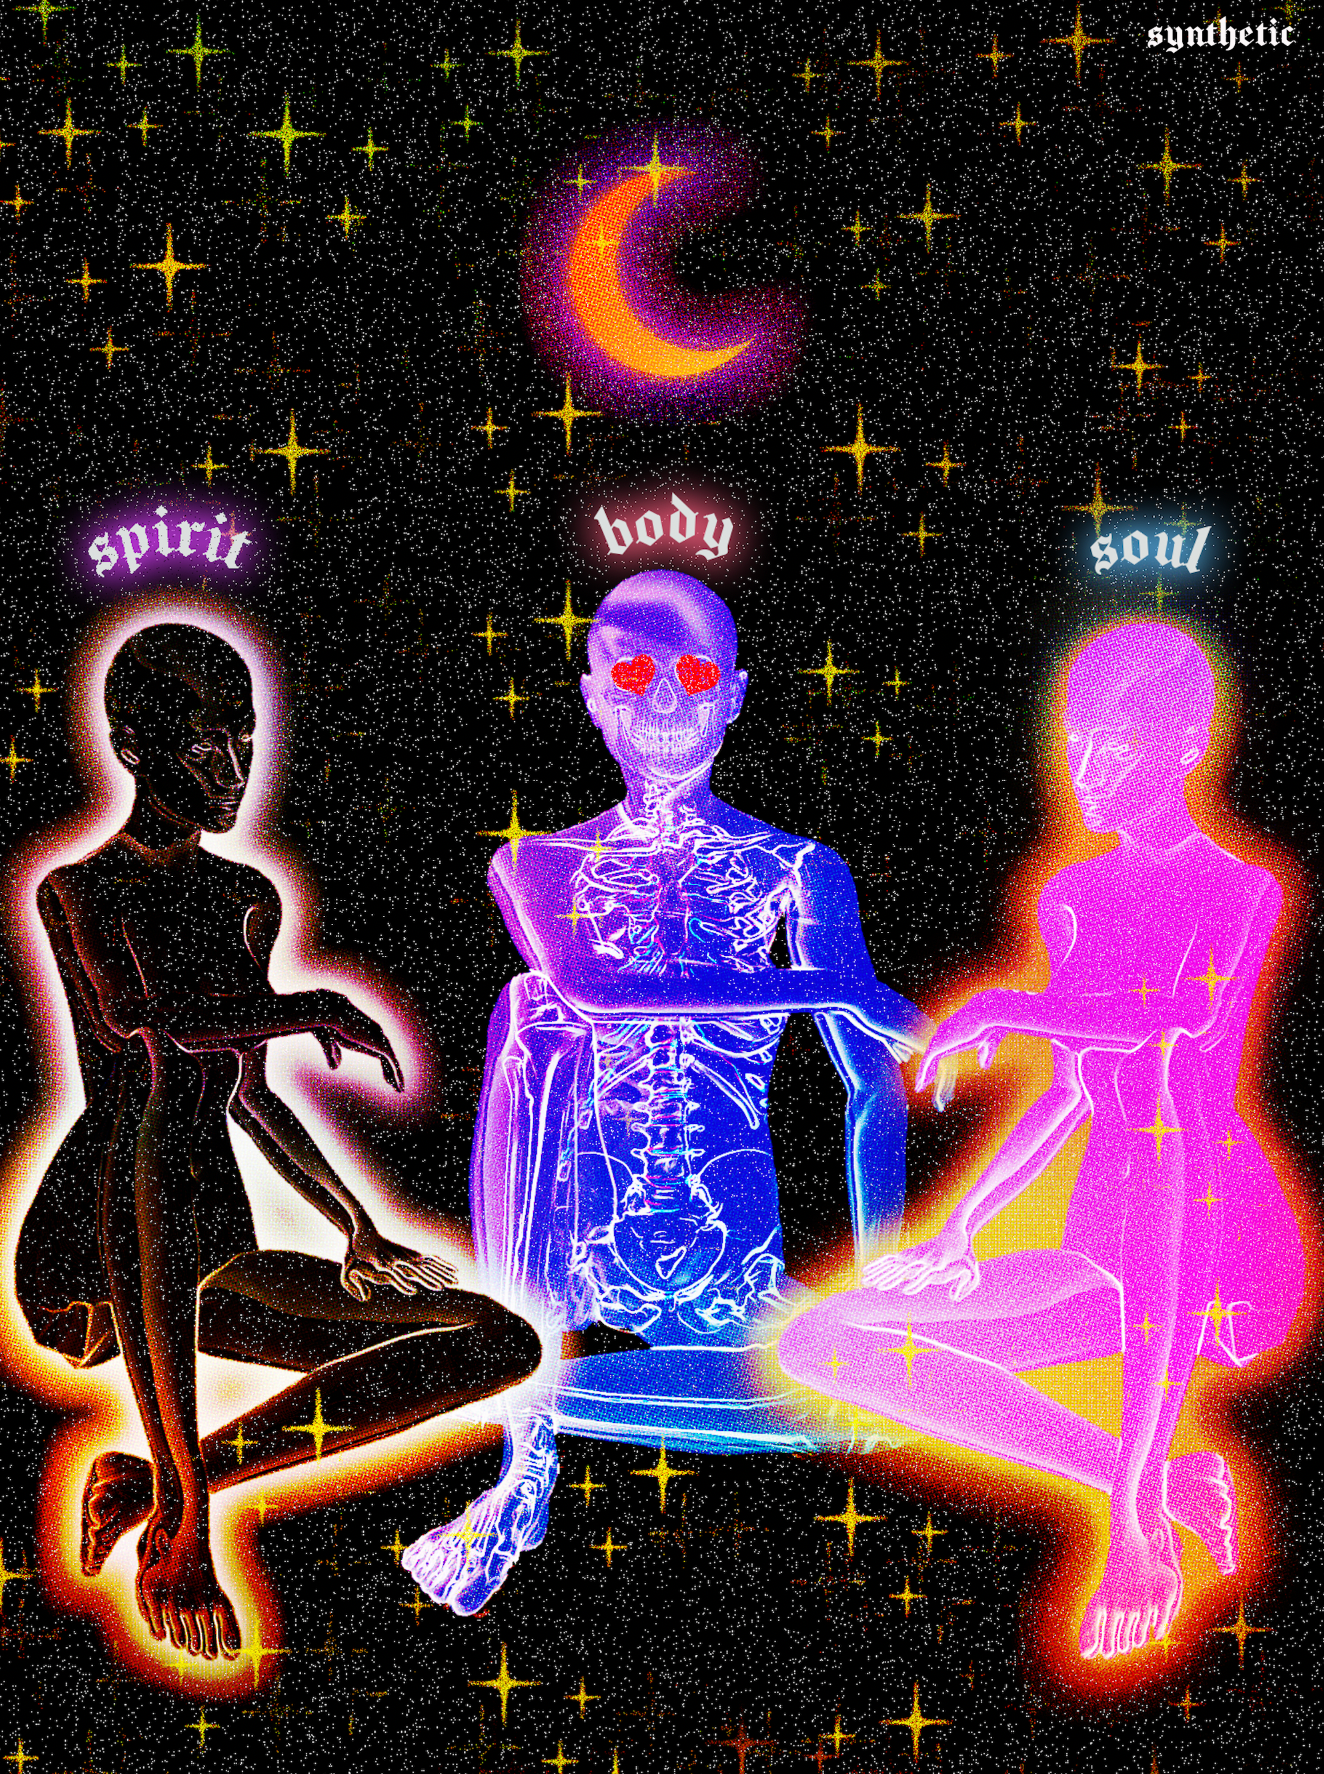 'spirit, body, soul' poster